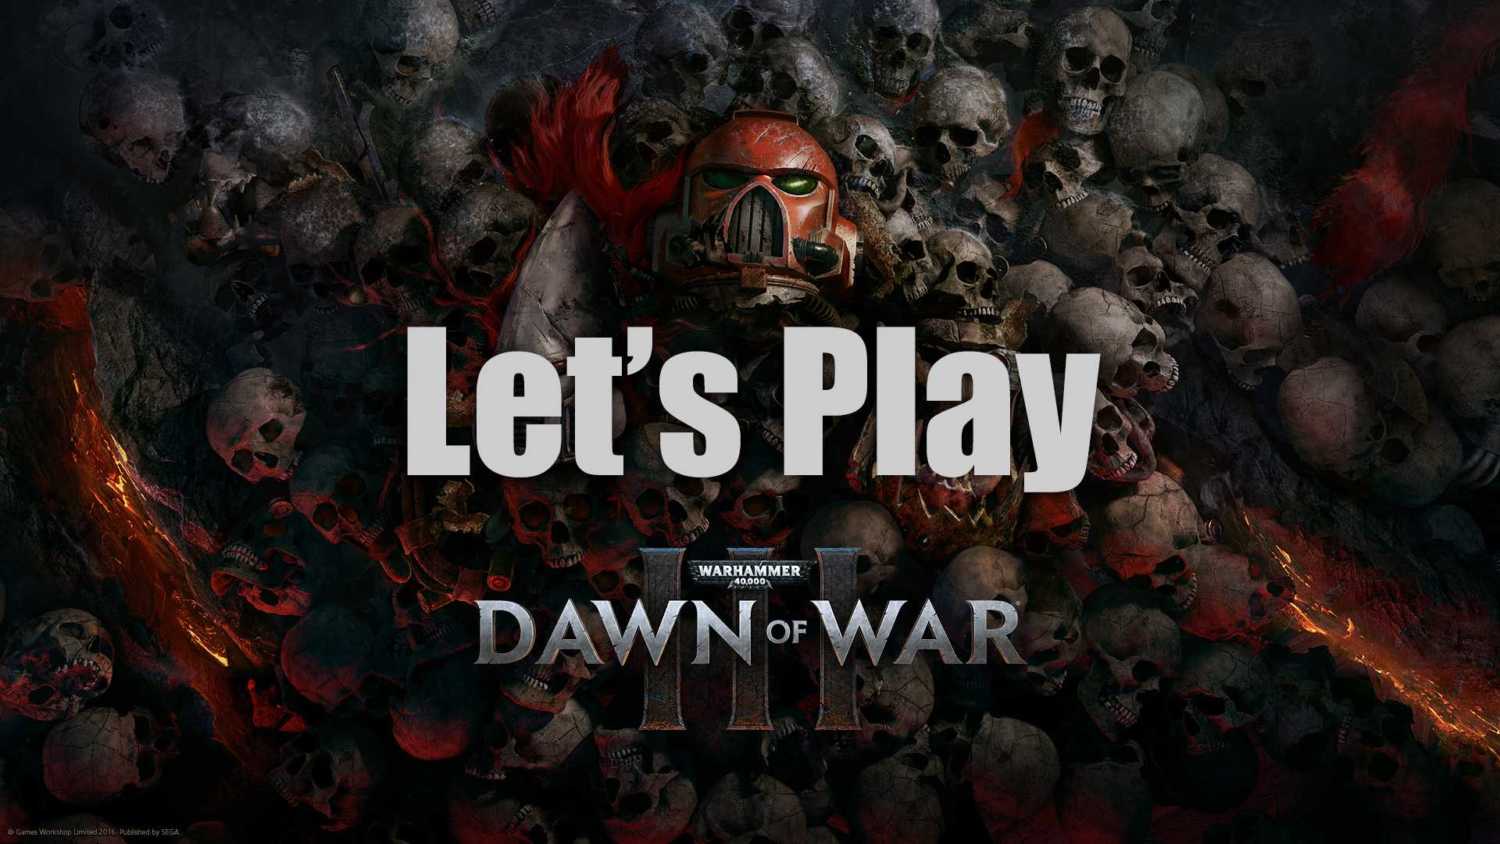 Let's Play Dawn of War III Image